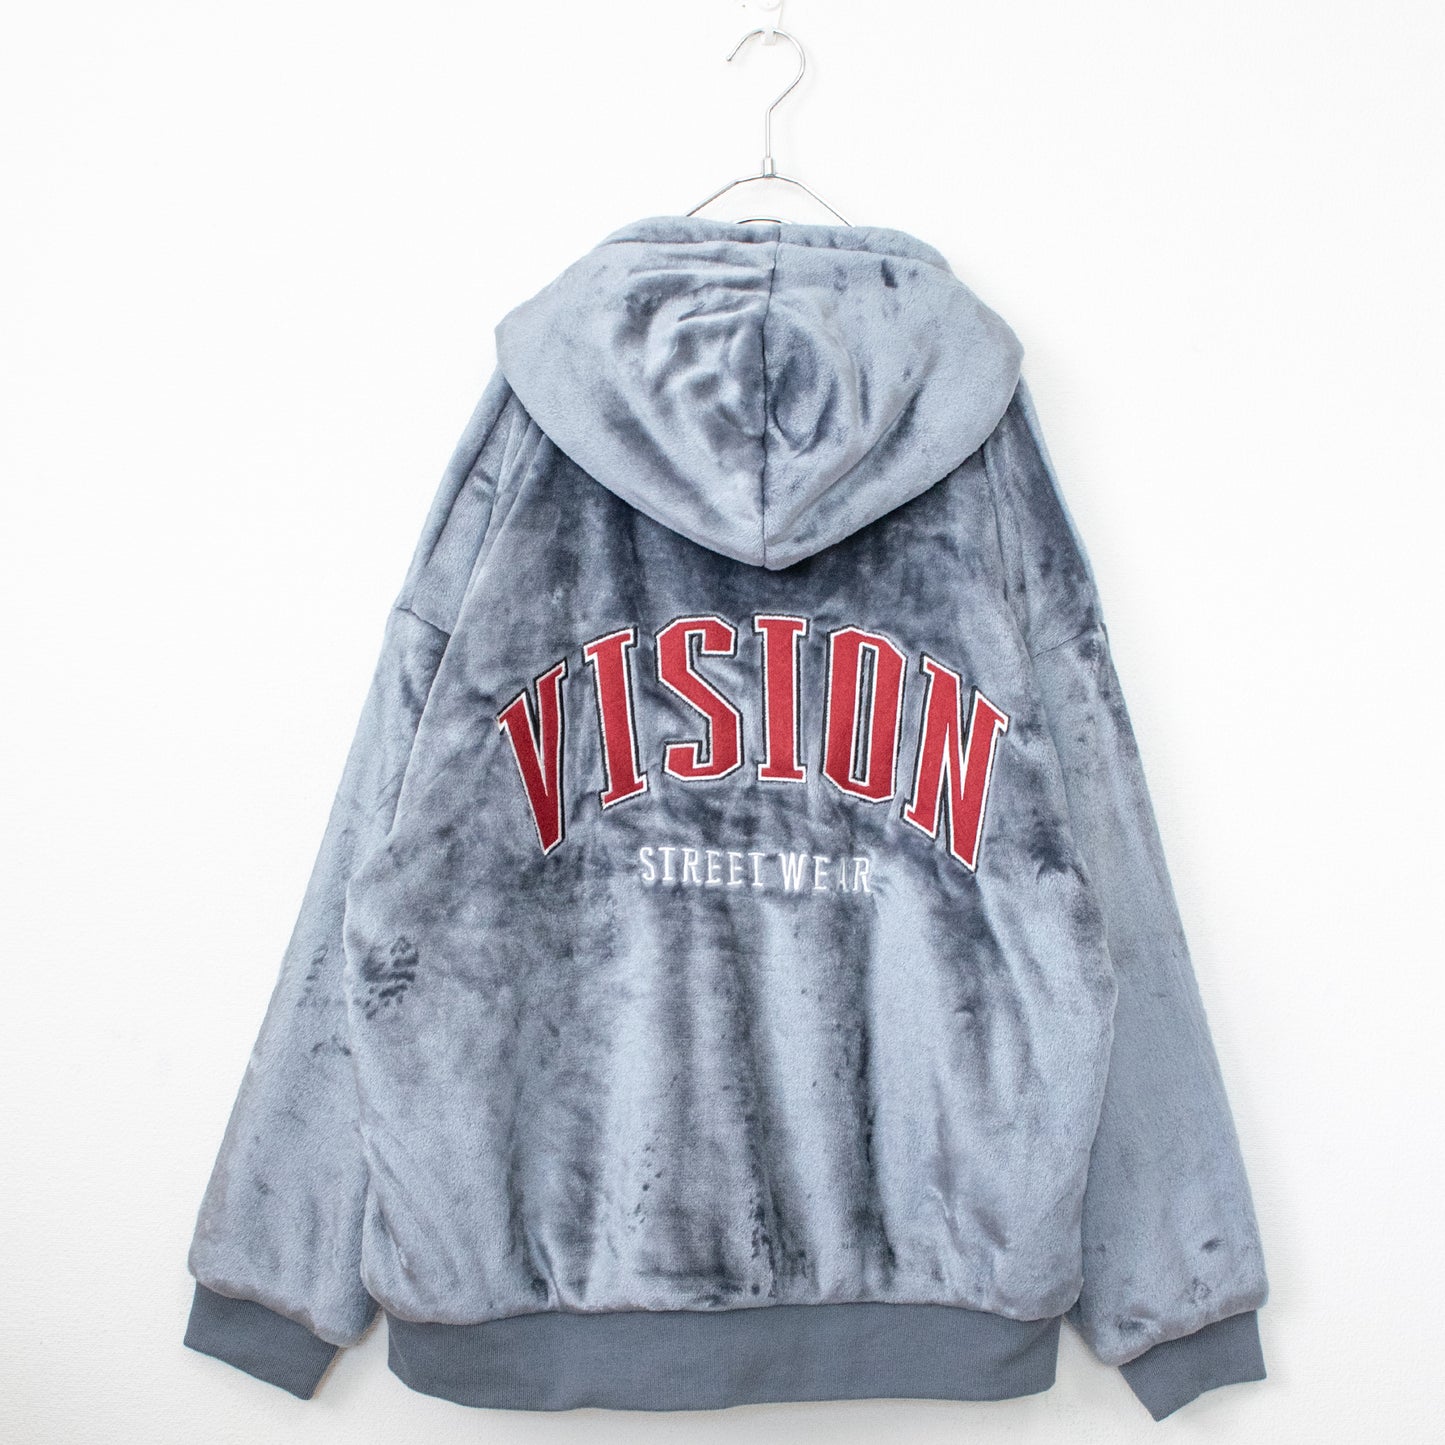 VISION STREET WEAR Patch Faux Fur Blouson Jacket - YOUAREMYPOISON